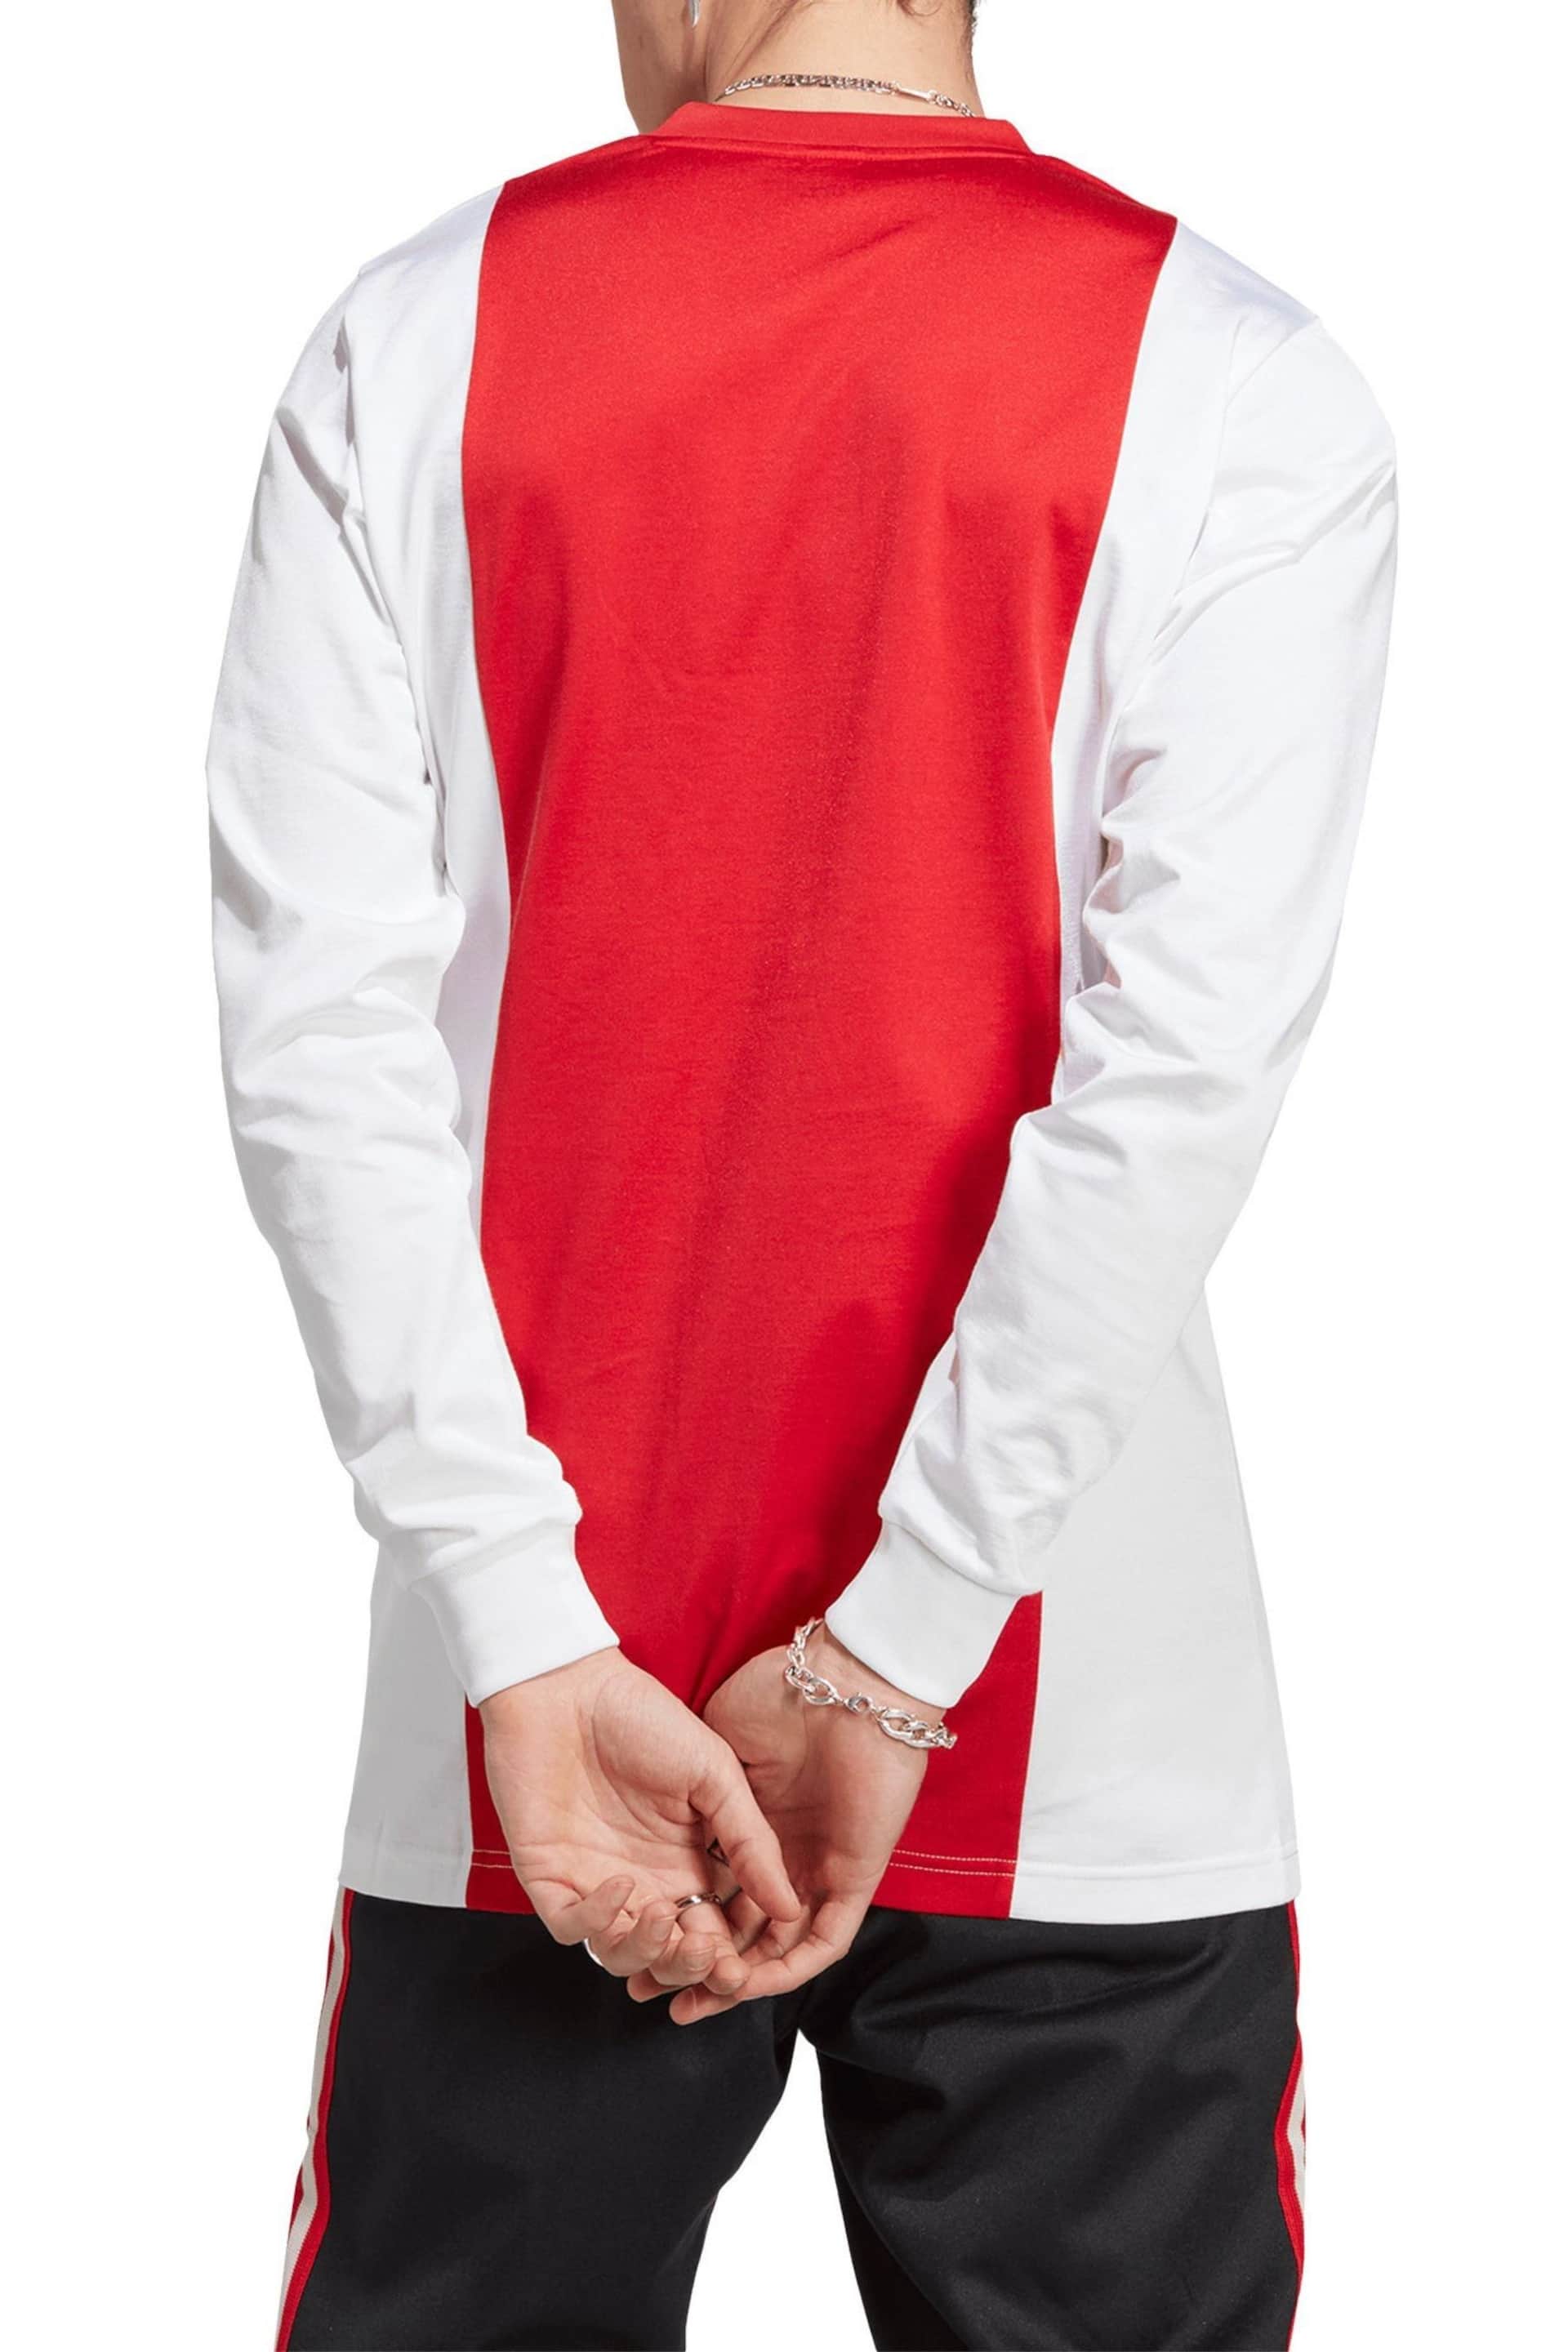 adidas Red Ajax x Originals OG Long Sleeve Jersey - Image 2 of 3